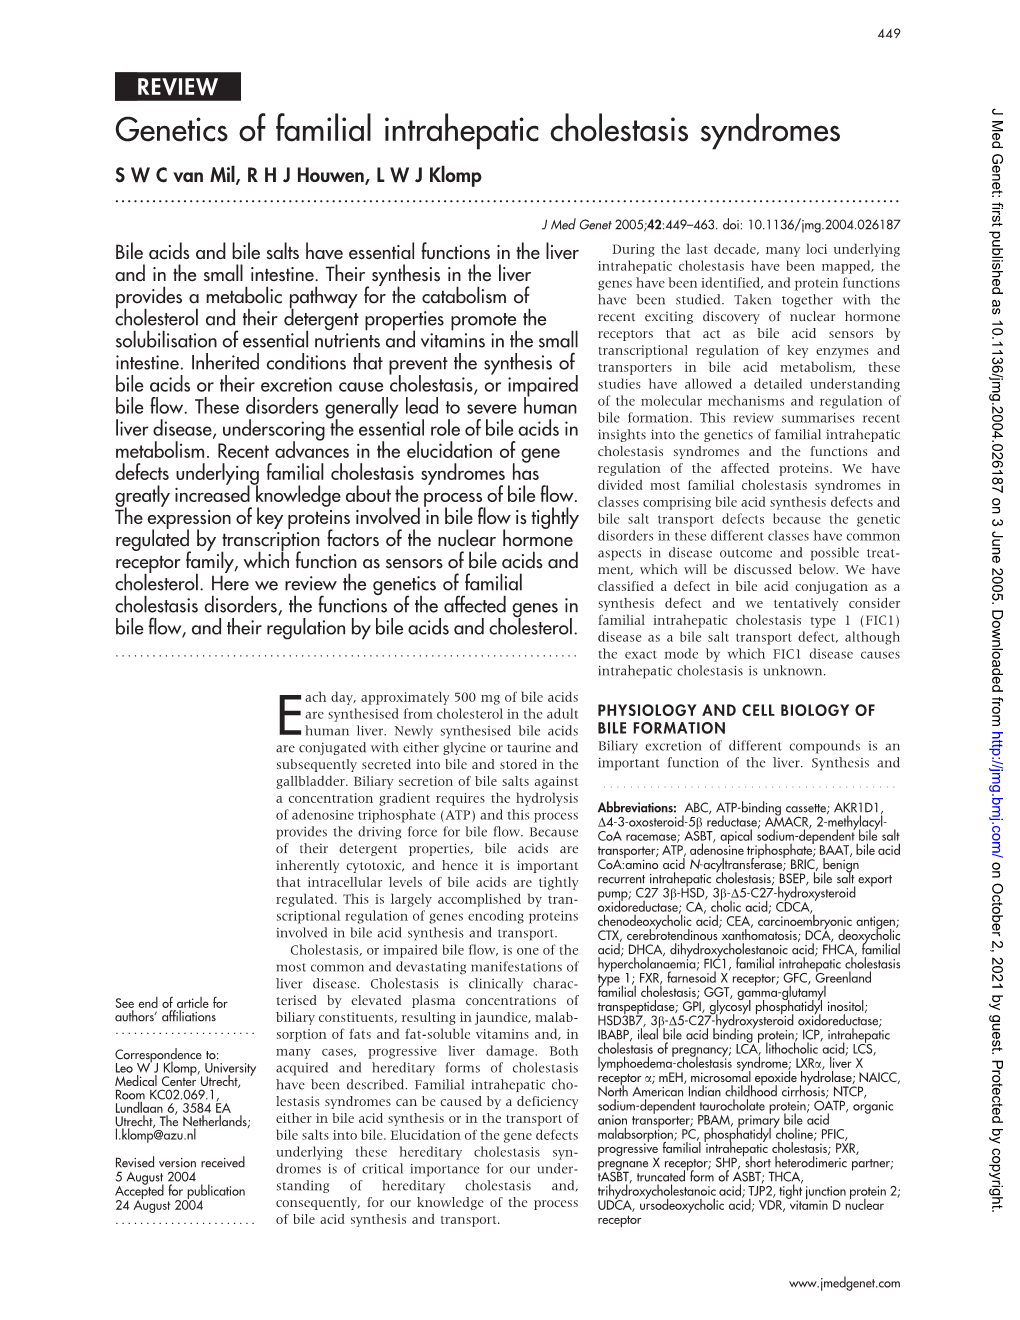 Genetics of Familial Intrahepatic Cholestasis Syndromes S W C Van Mil, R H J Houwen, L W J Klomp